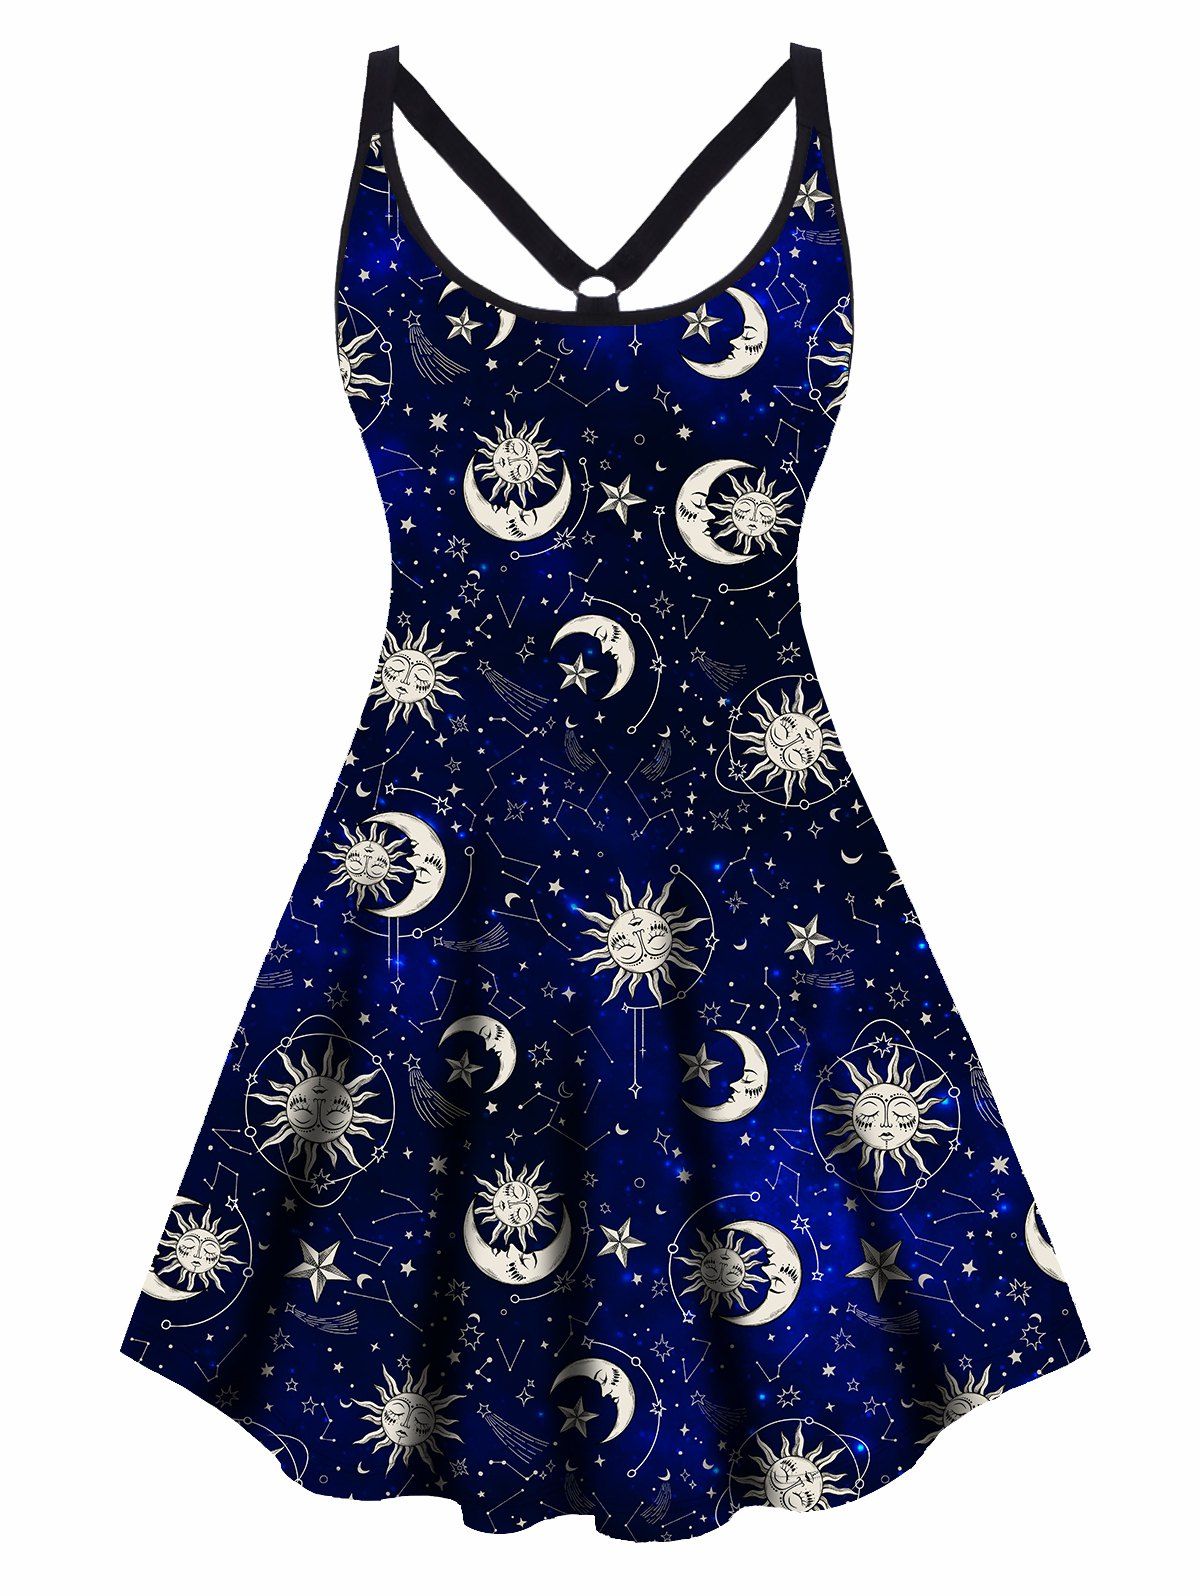 Plus Size Dress Vintage Sun Moon Print Cut Out High Waisted A Line Mini Dress - BLACK L